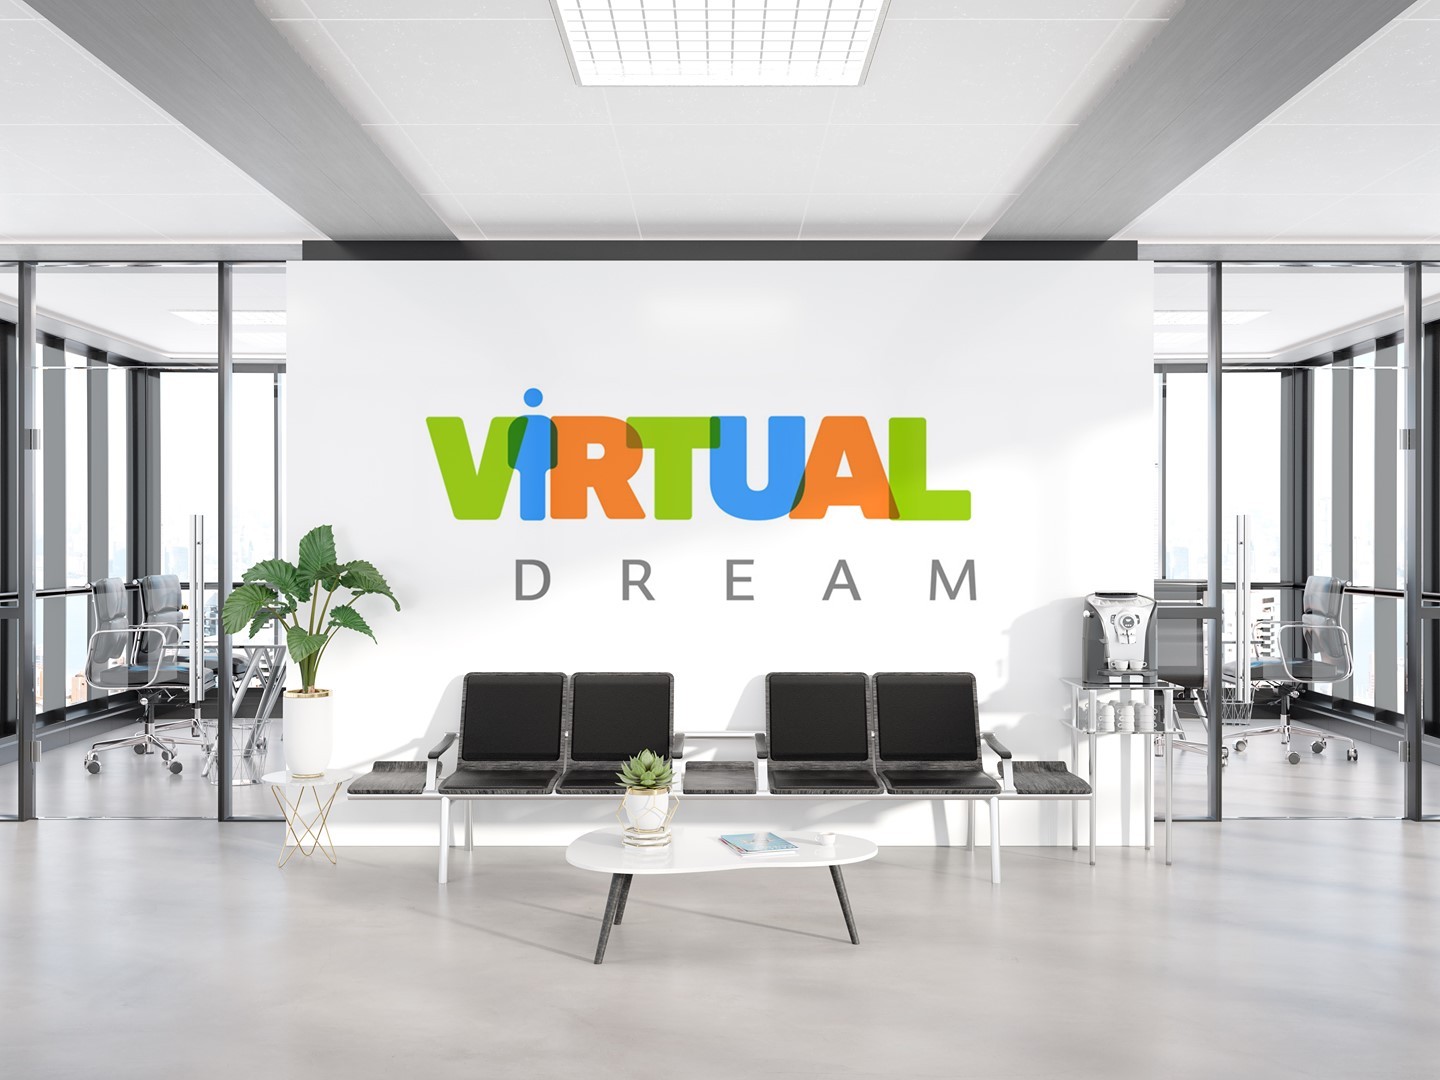 Virtual Dream logo design. Looks fantastic in the office.

#logodesign #officemural #logos #graphicdesign #freelancer #freelancing #marketing #advertising #marketinggenius #ineedalogo